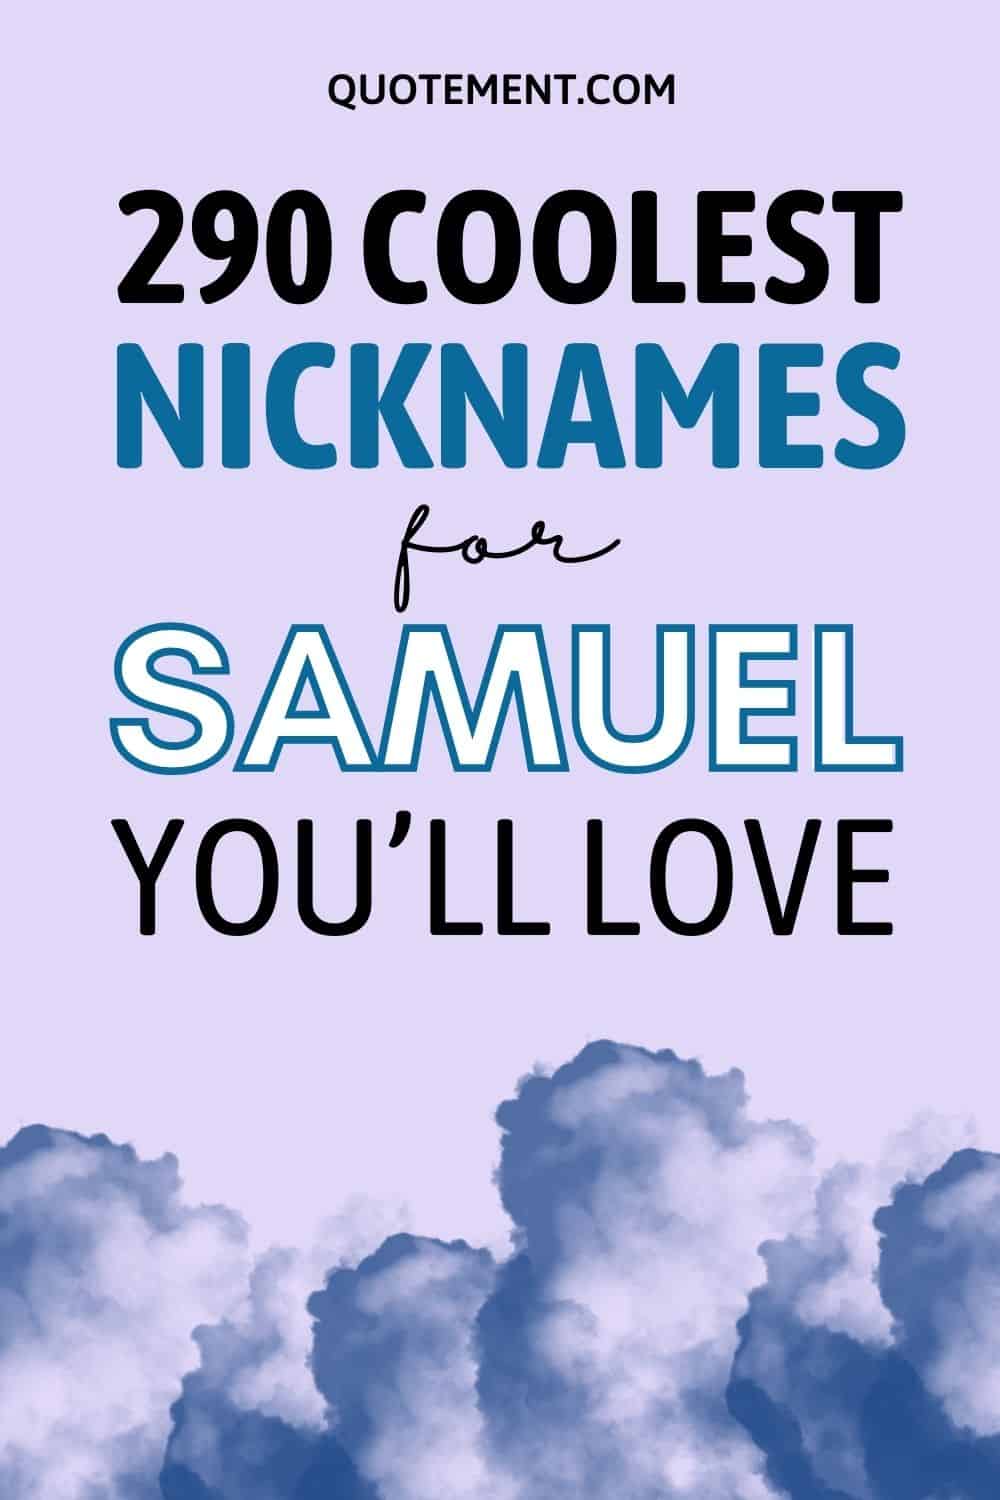 290 Most Wonderful, Cute & Hilarious Nicknames For Samuel